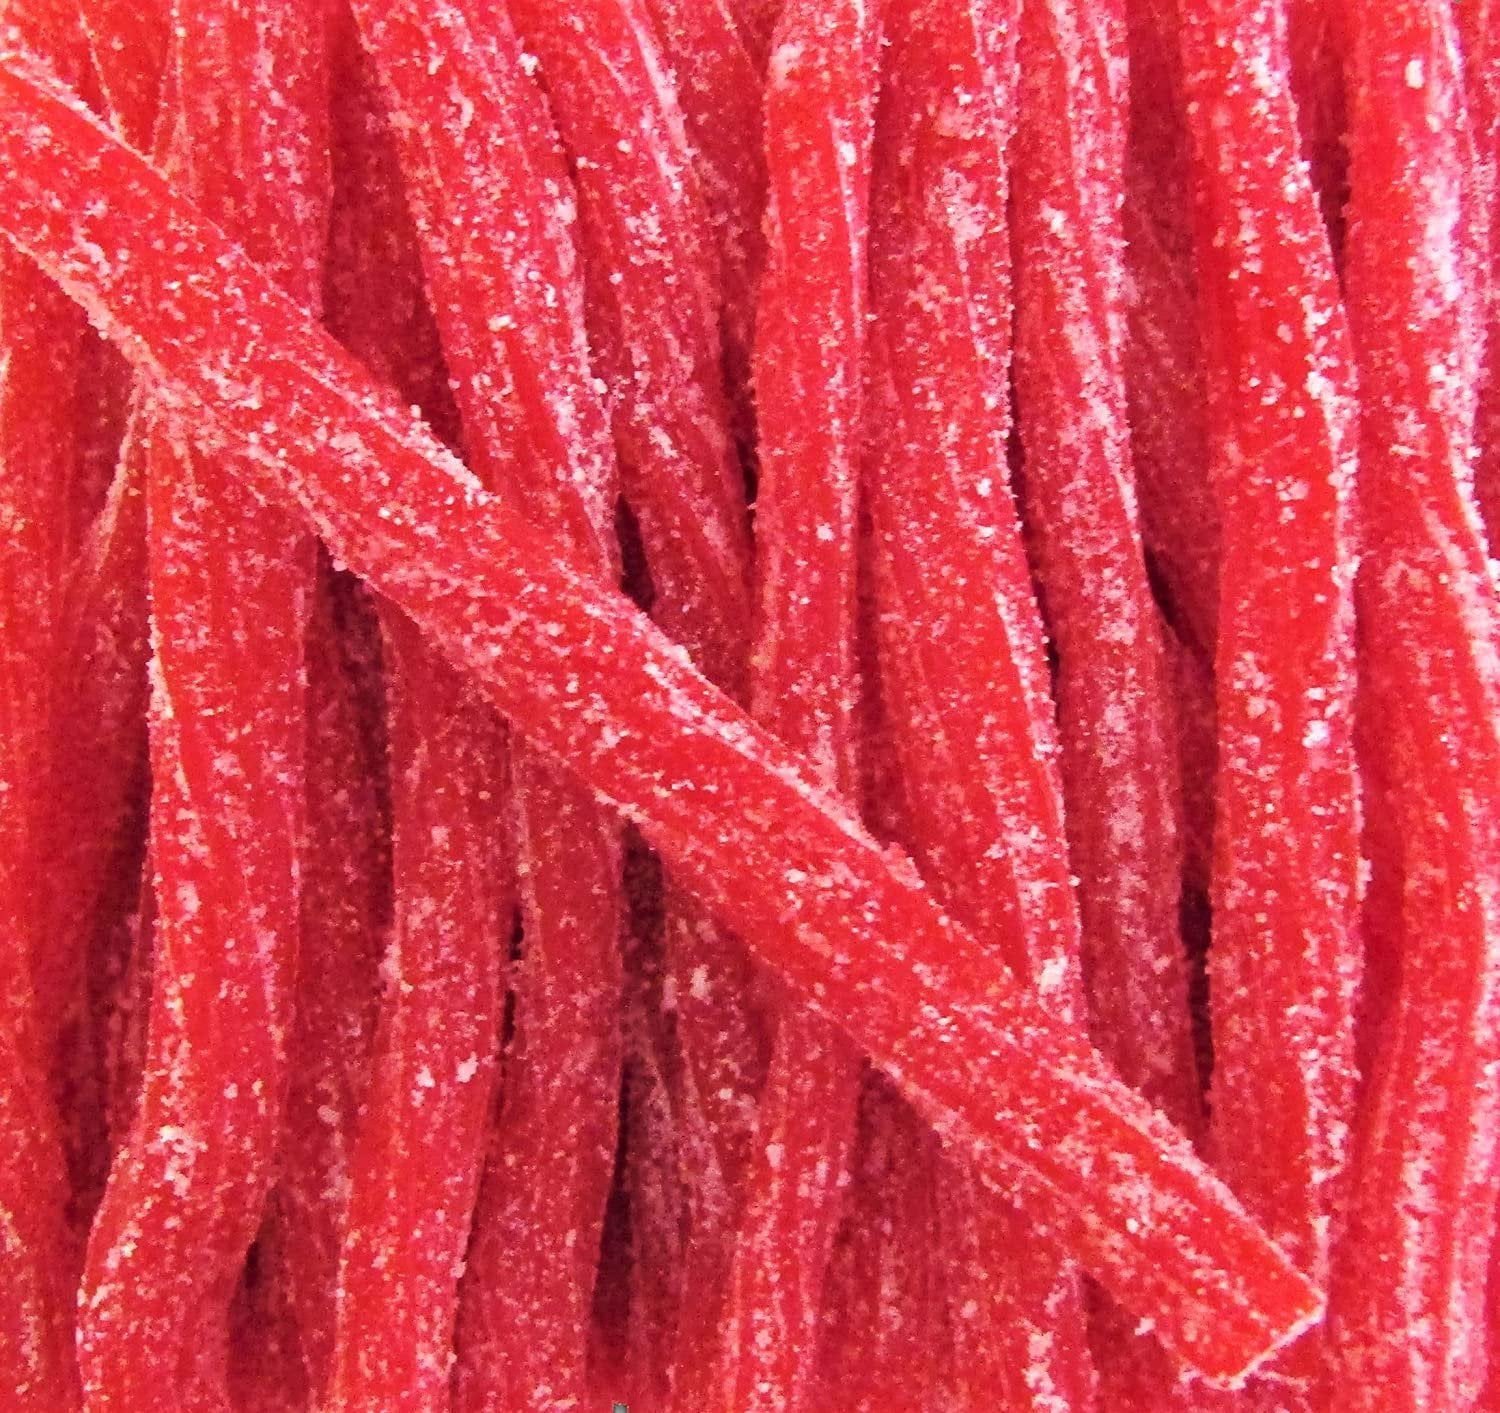 Sour Strawberry Licorice Sticks